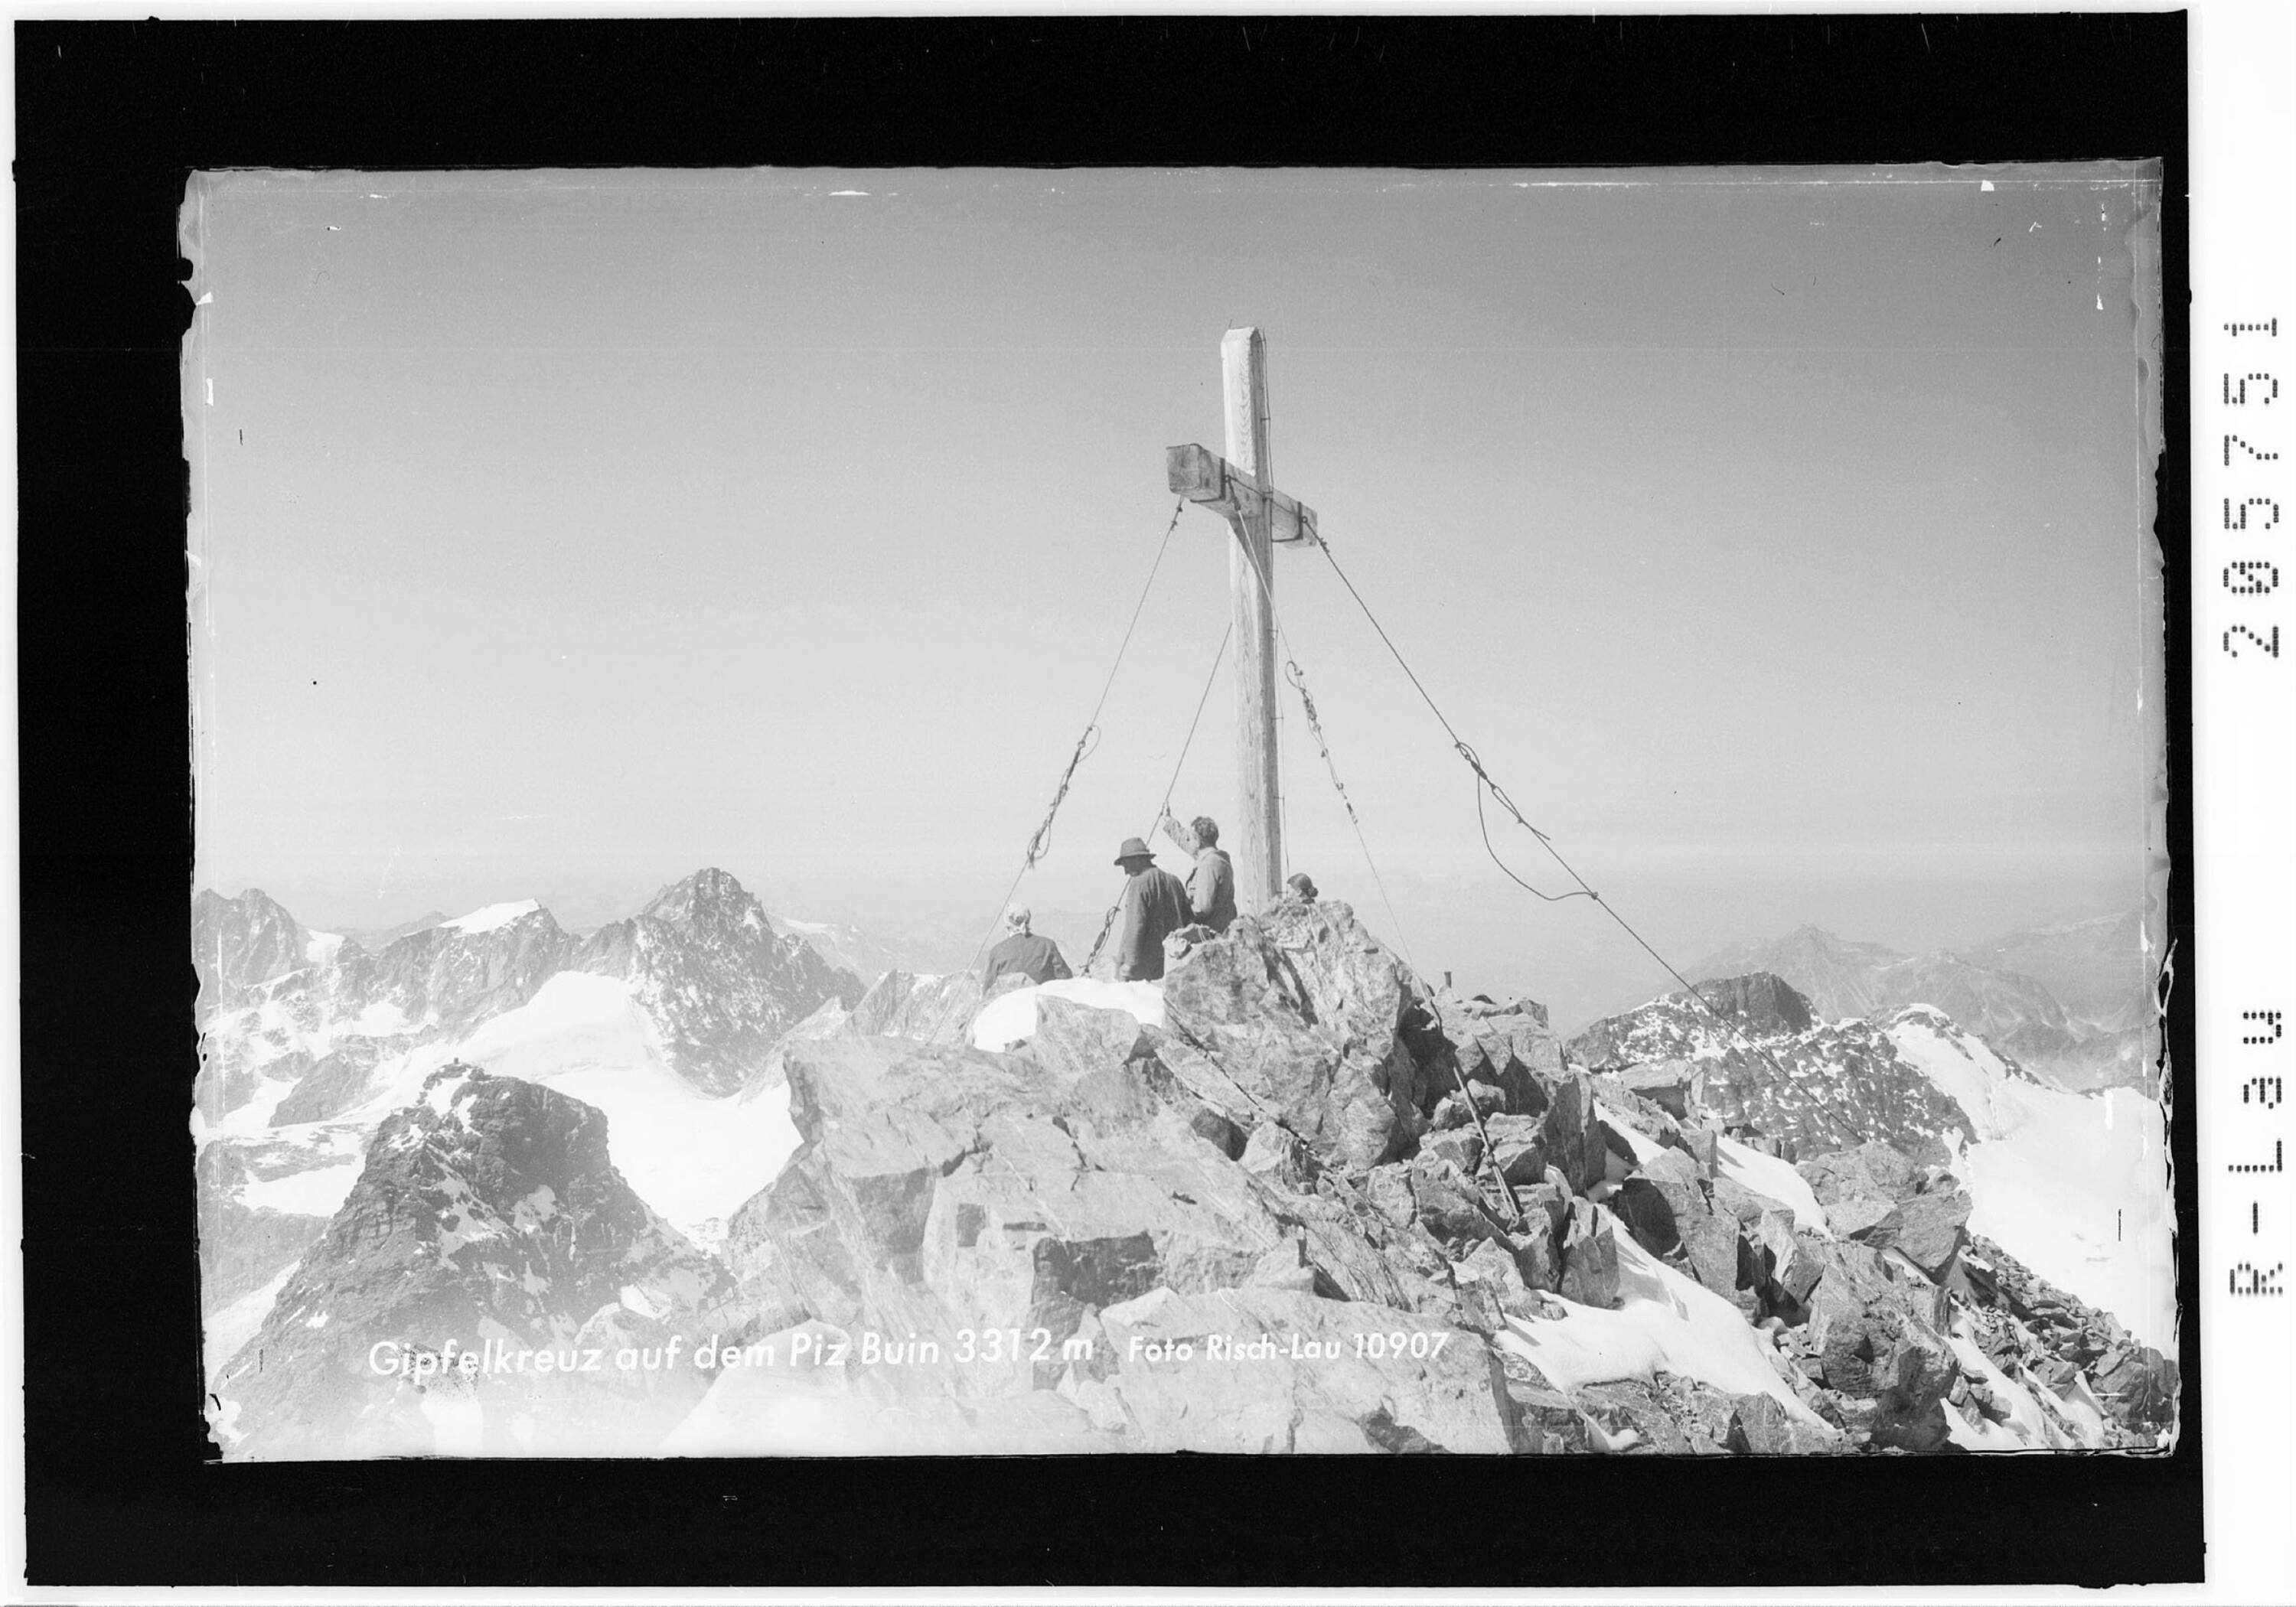 Gipfelkreuz am Piz Buin 3312 m></div>


    <hr>
    <div class=